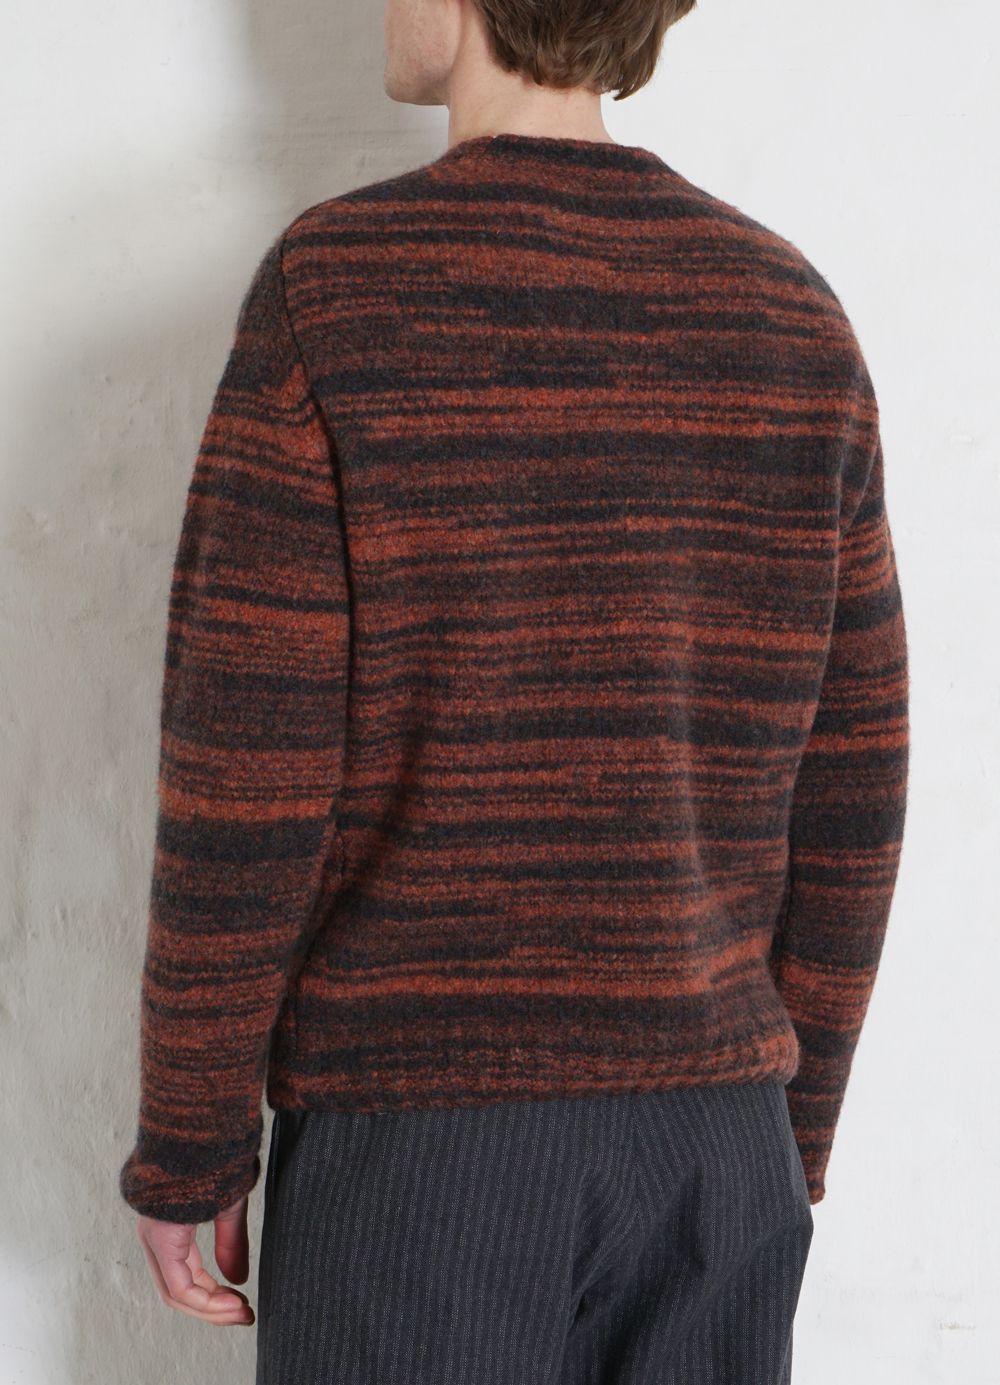 HANSEN GARMENTS - LEONARD | Knitted Crew Neck Sweater | Bonfire - HANSEN Garments